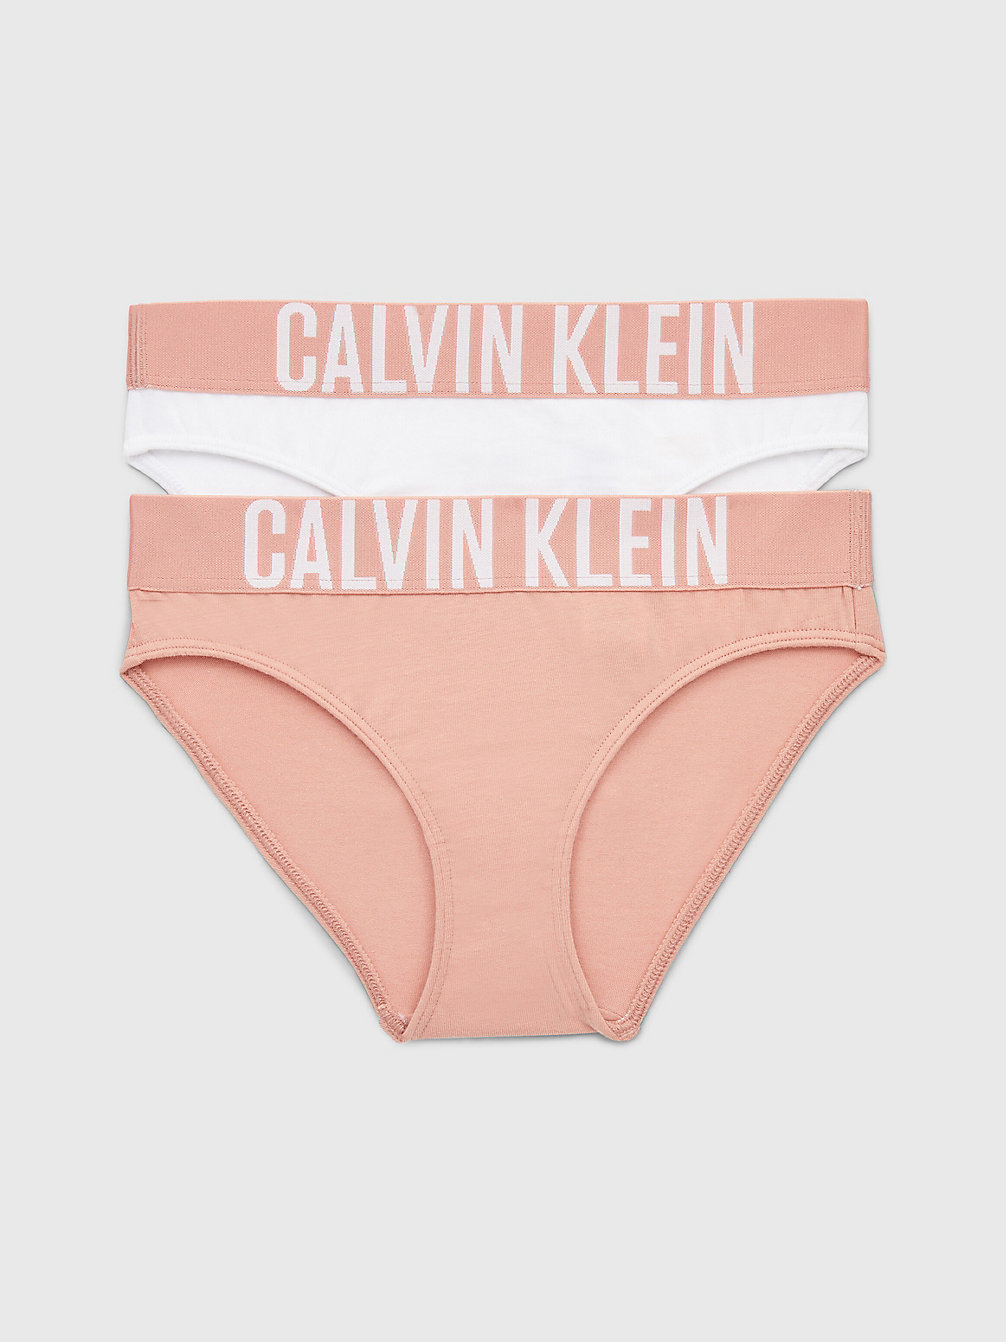 PINKMOCHA/PVHWHITE 2 Pack Girls Bikini Briefs - Intense Power undefined girls Calvin Klein